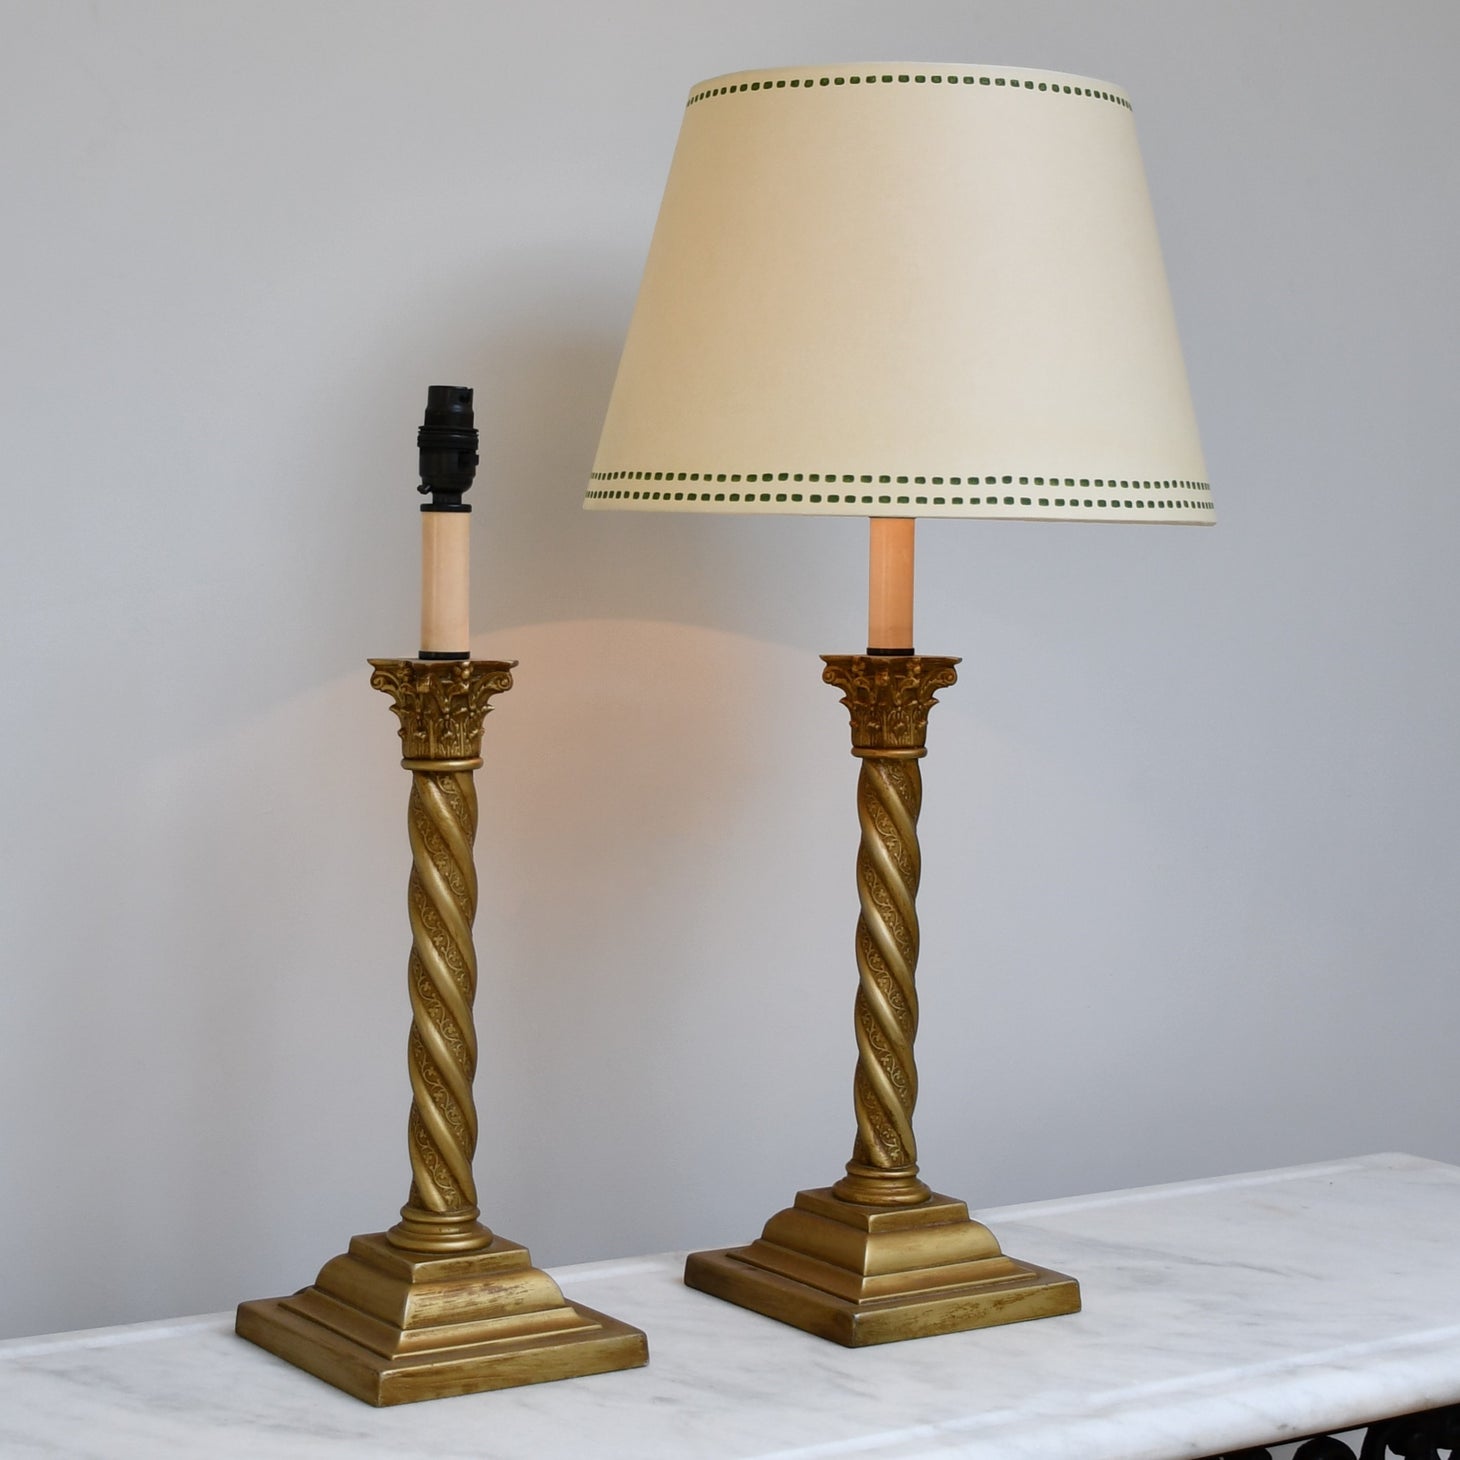 A Pair of Vintage Corinthian Column - Candlestick Lamps